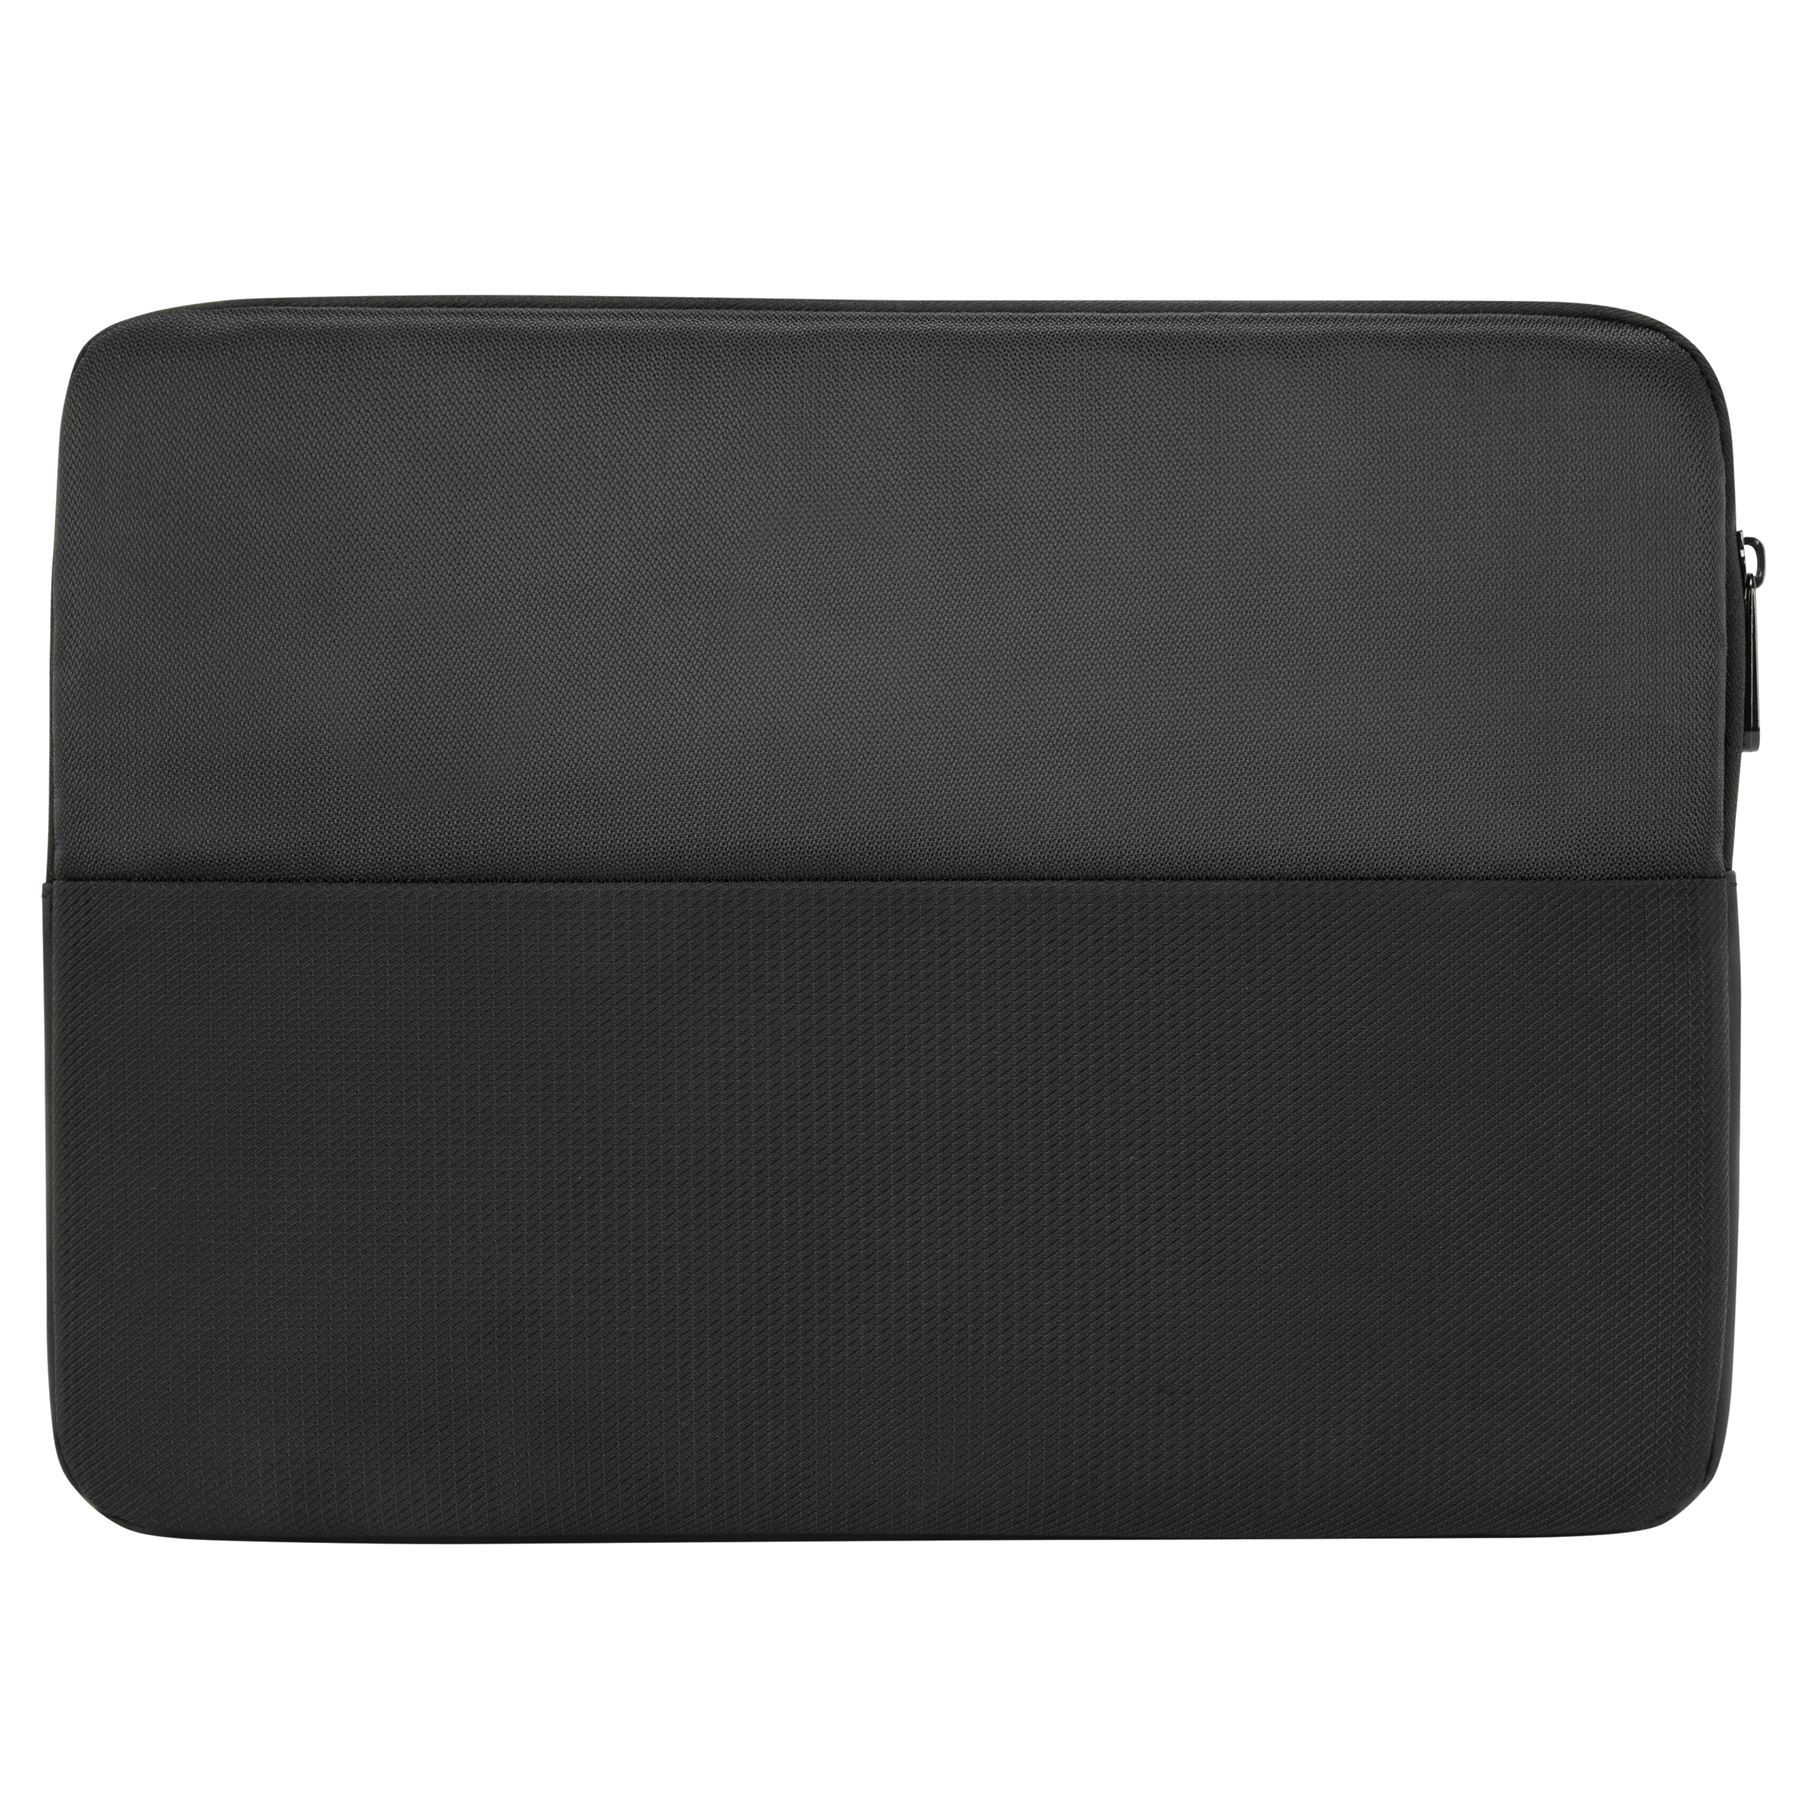 Targus CityGear notebook case 35.6 cm (14&quot;) Sleeve case Black